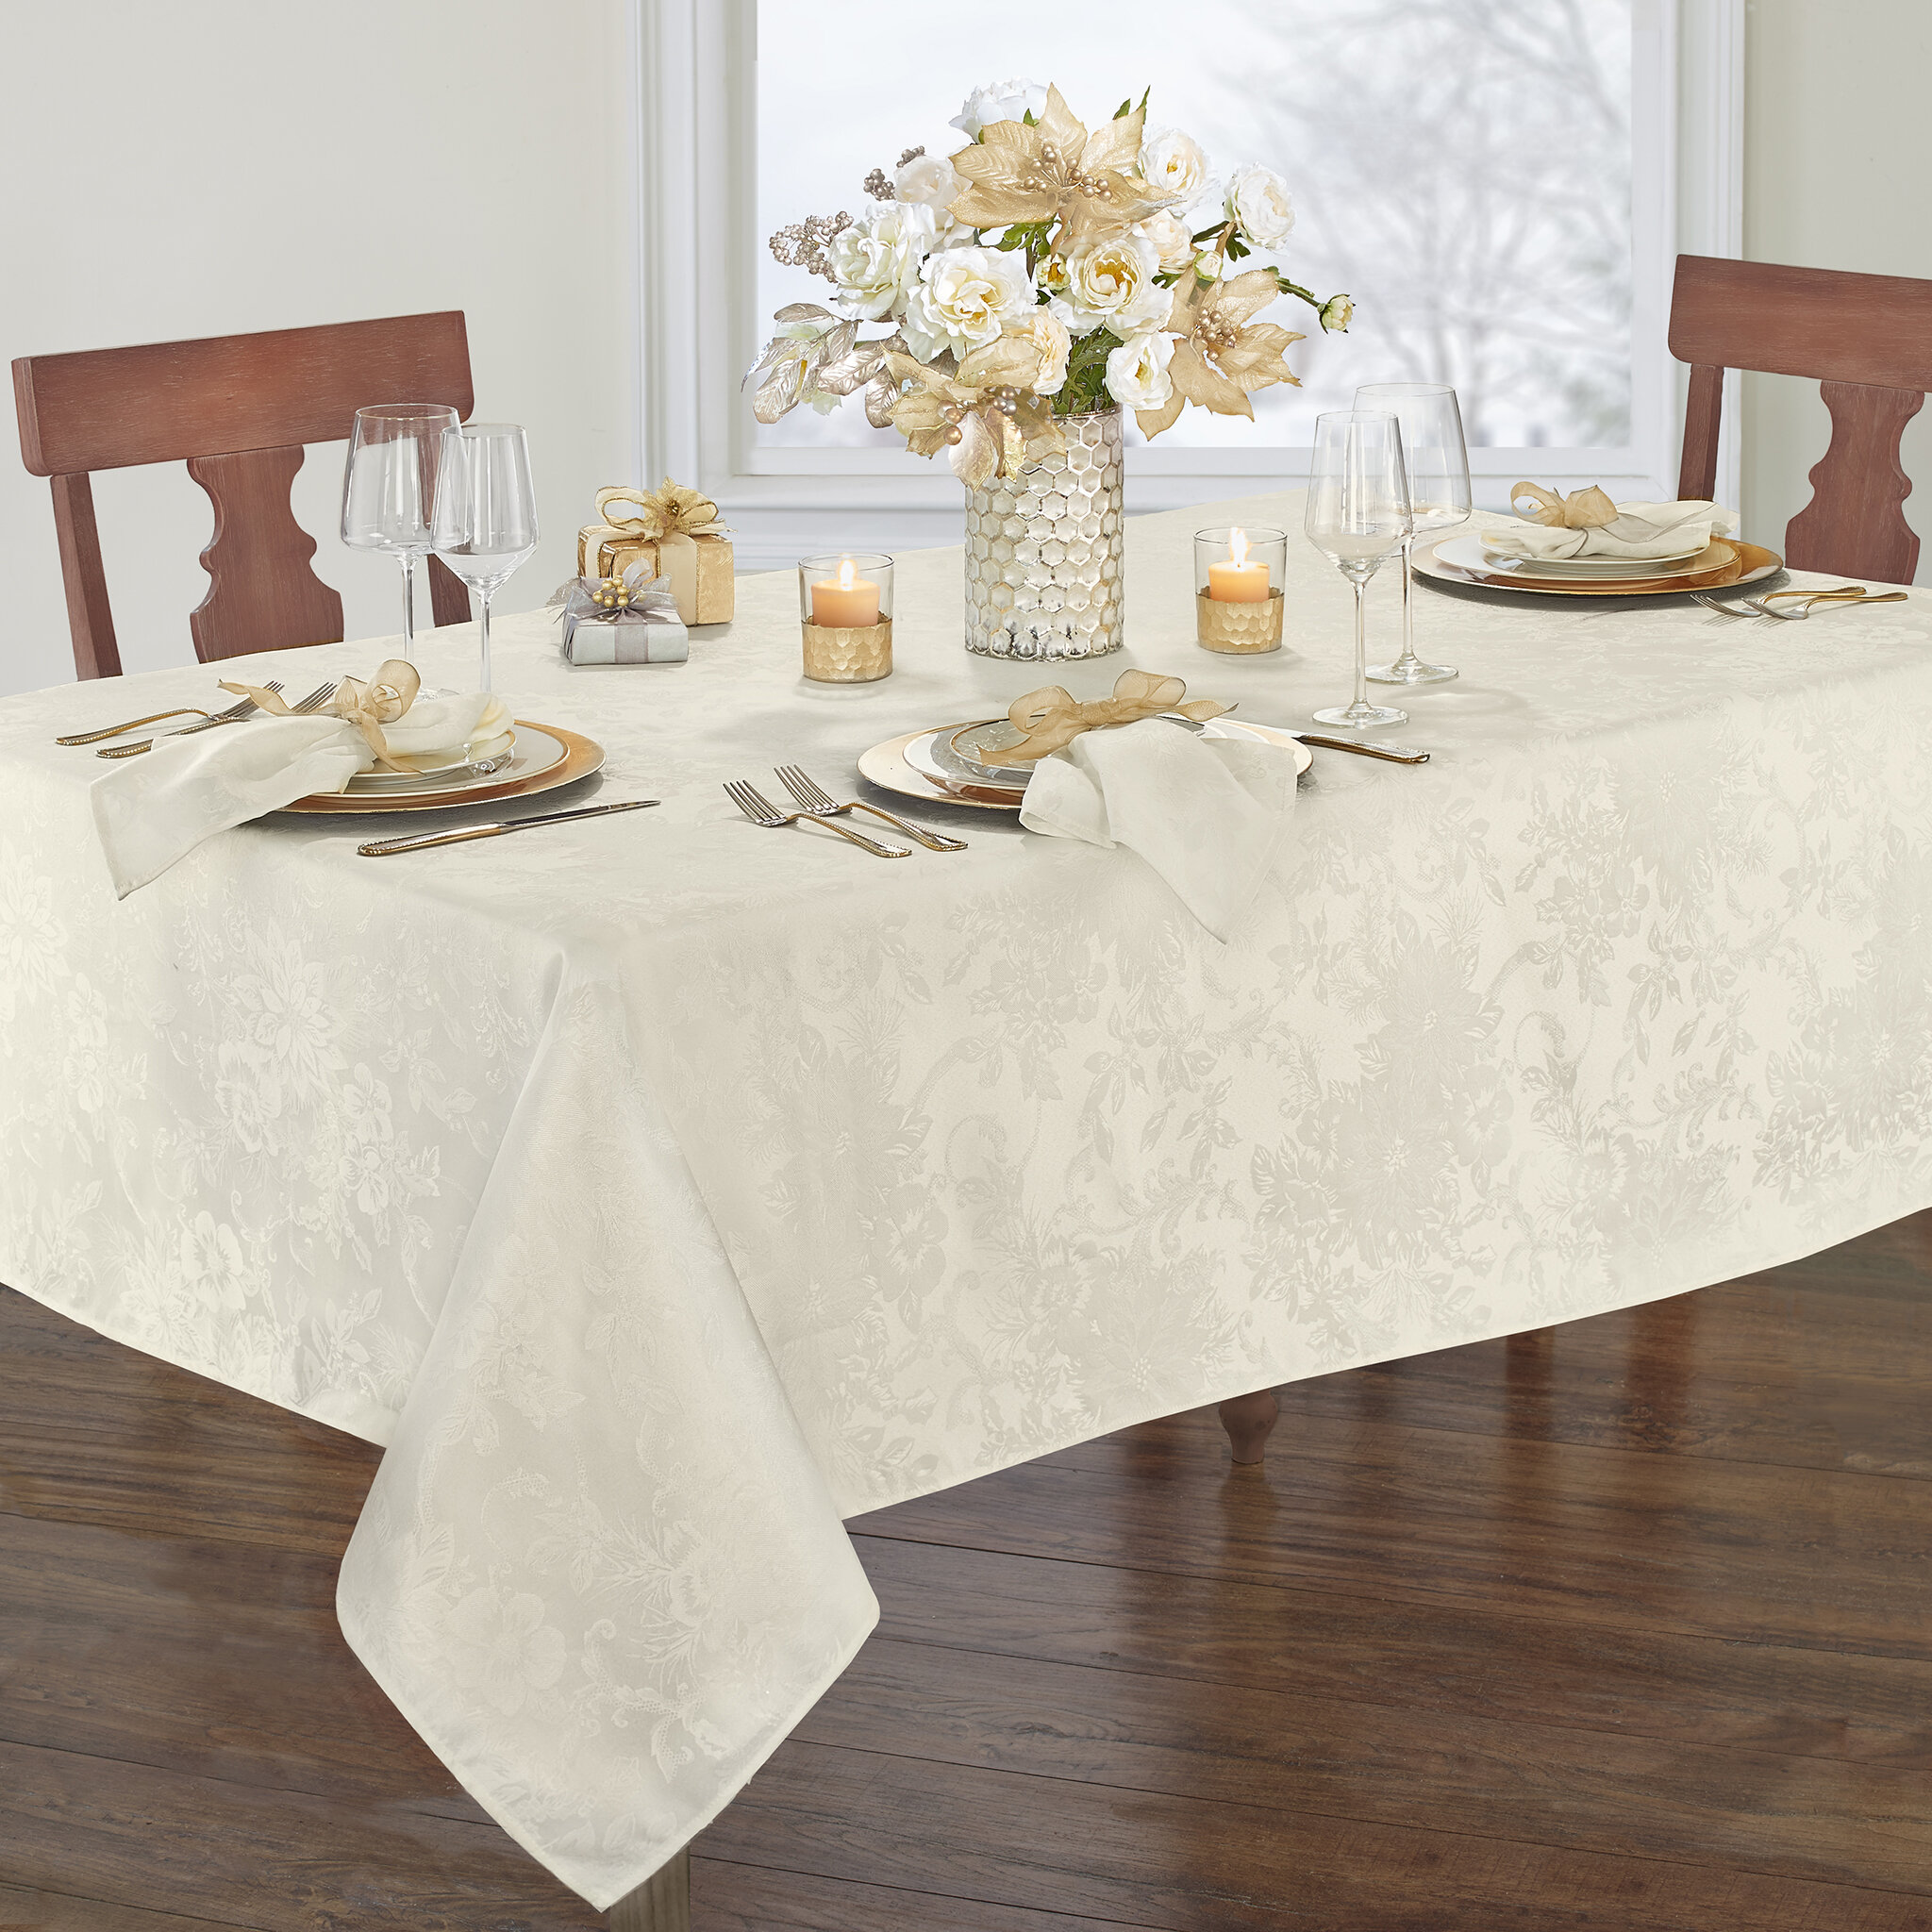 Premium Quality Best Damask Jacquard Table cloths Table Runner & Napkins 